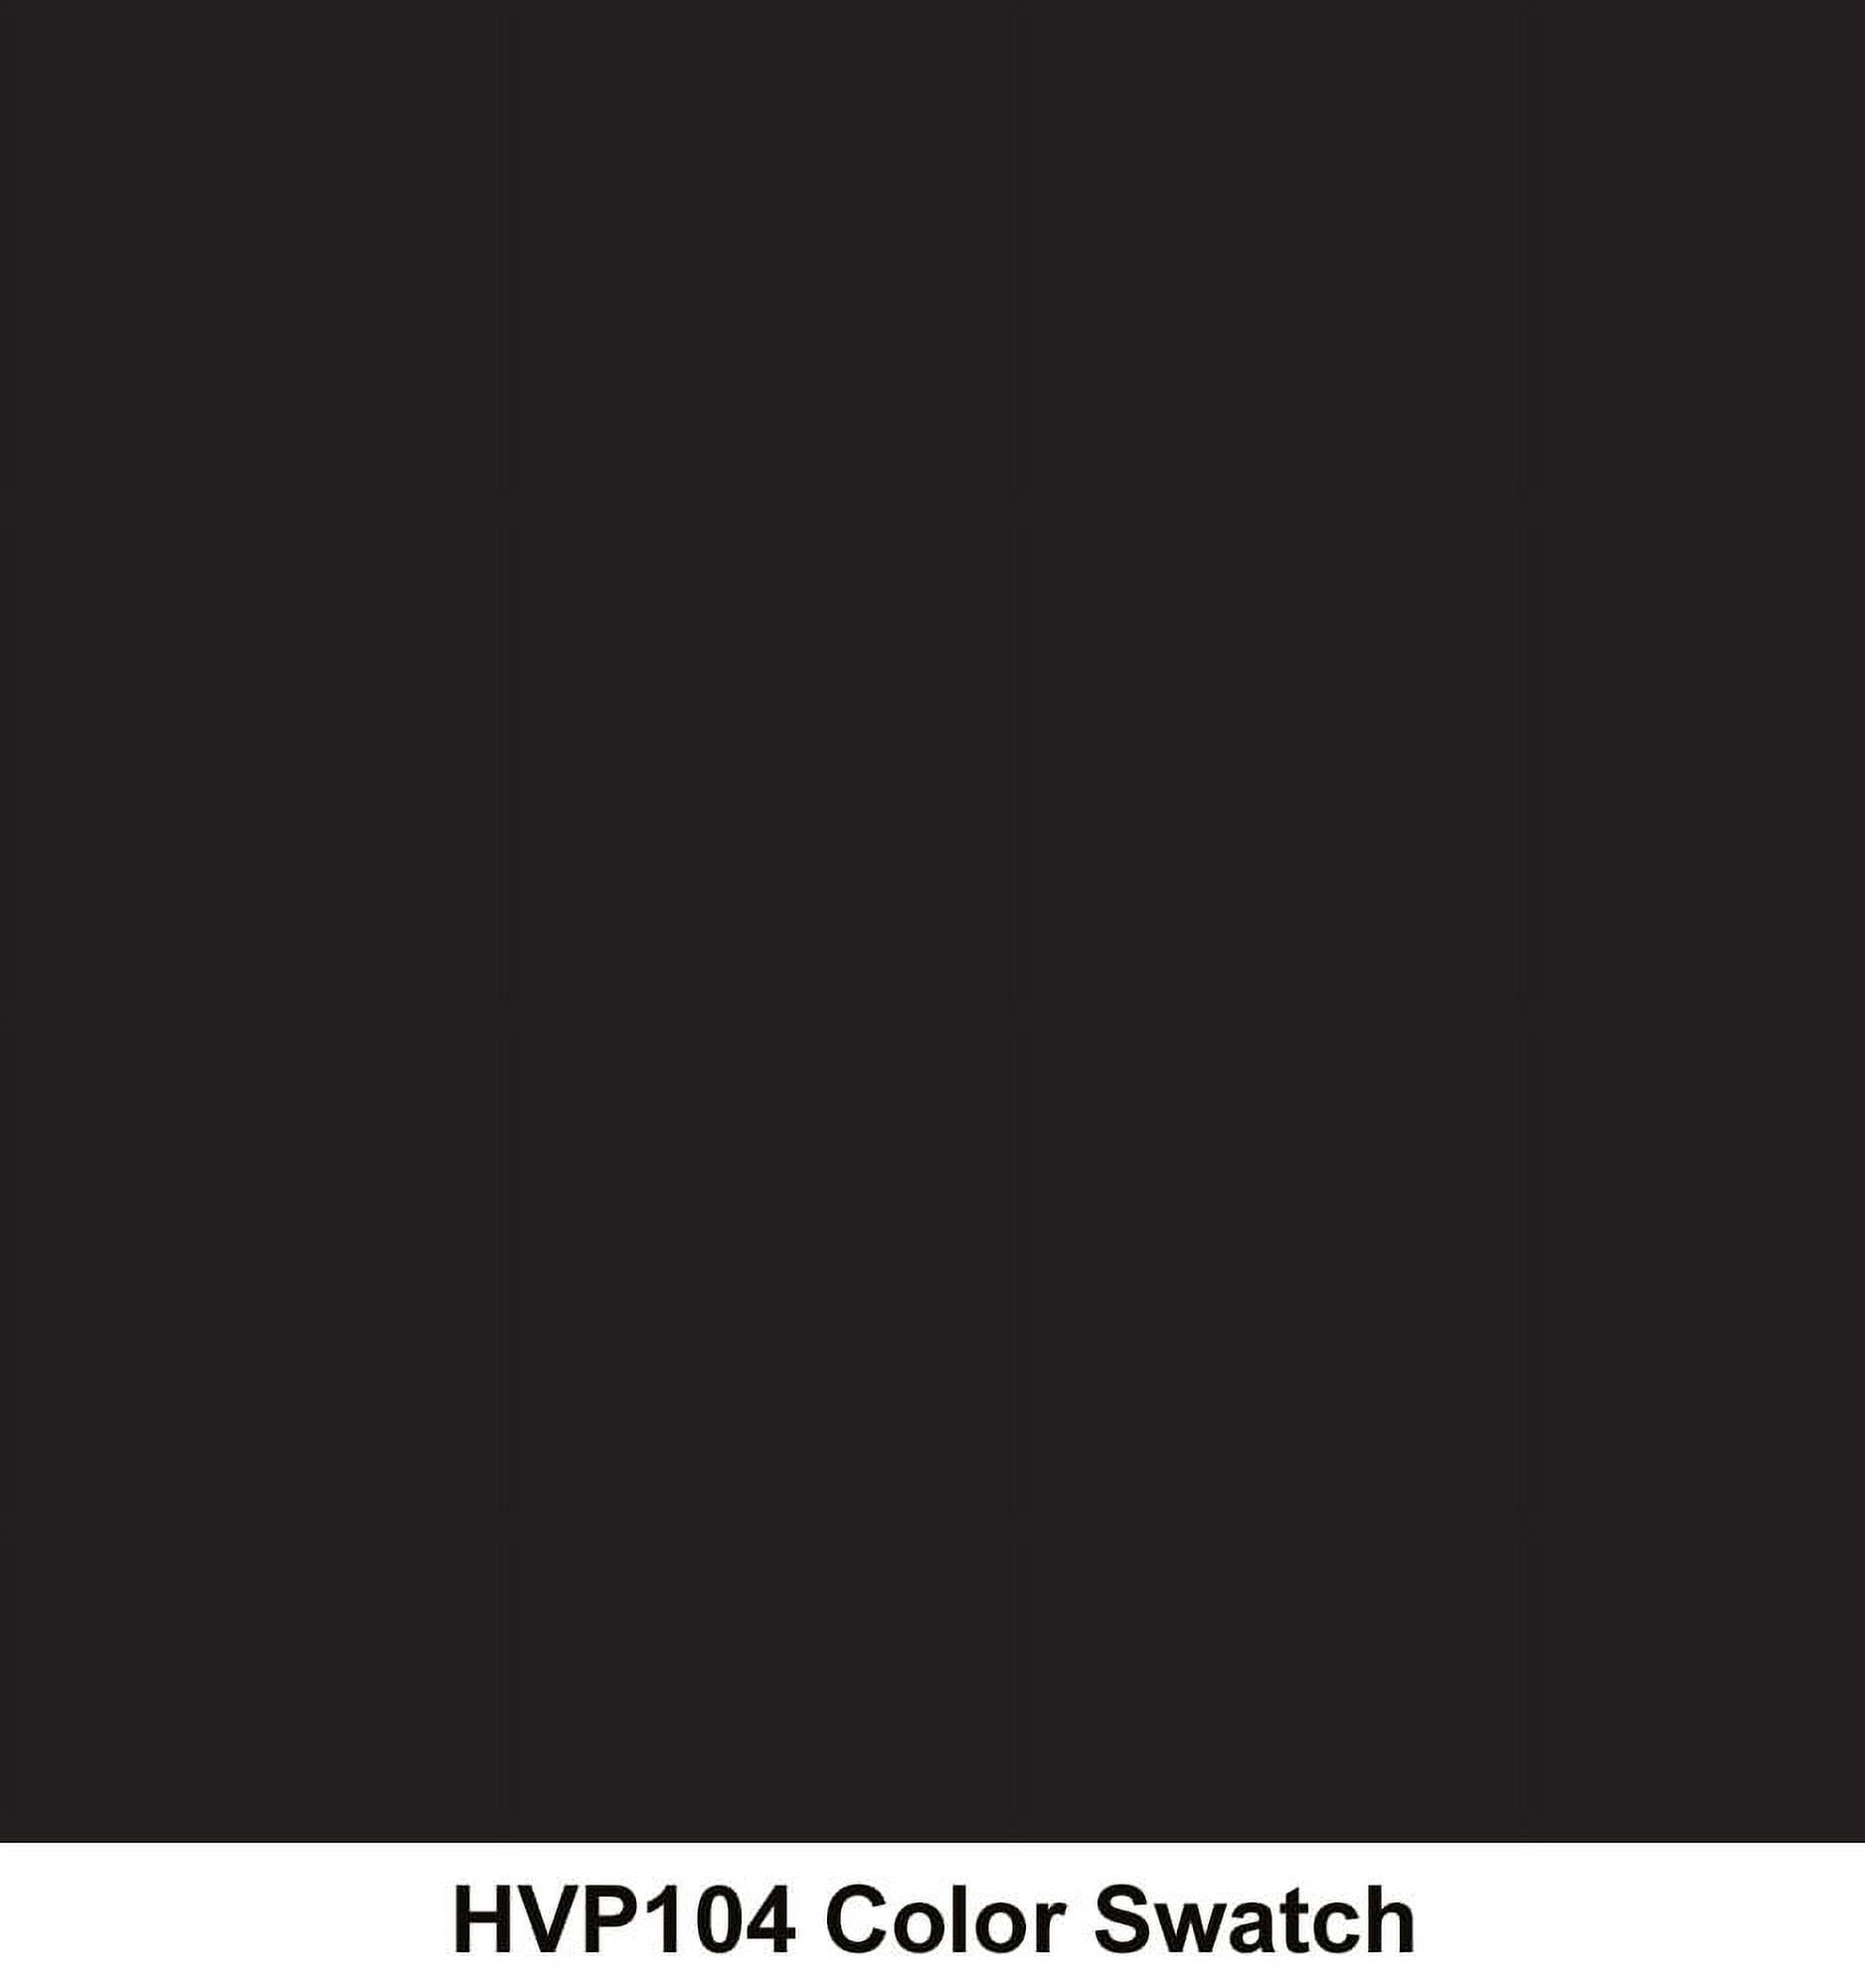 Dupli-Color Vinyl & Fabric Paint Gloss Black 311g - HVP104 - Dupli